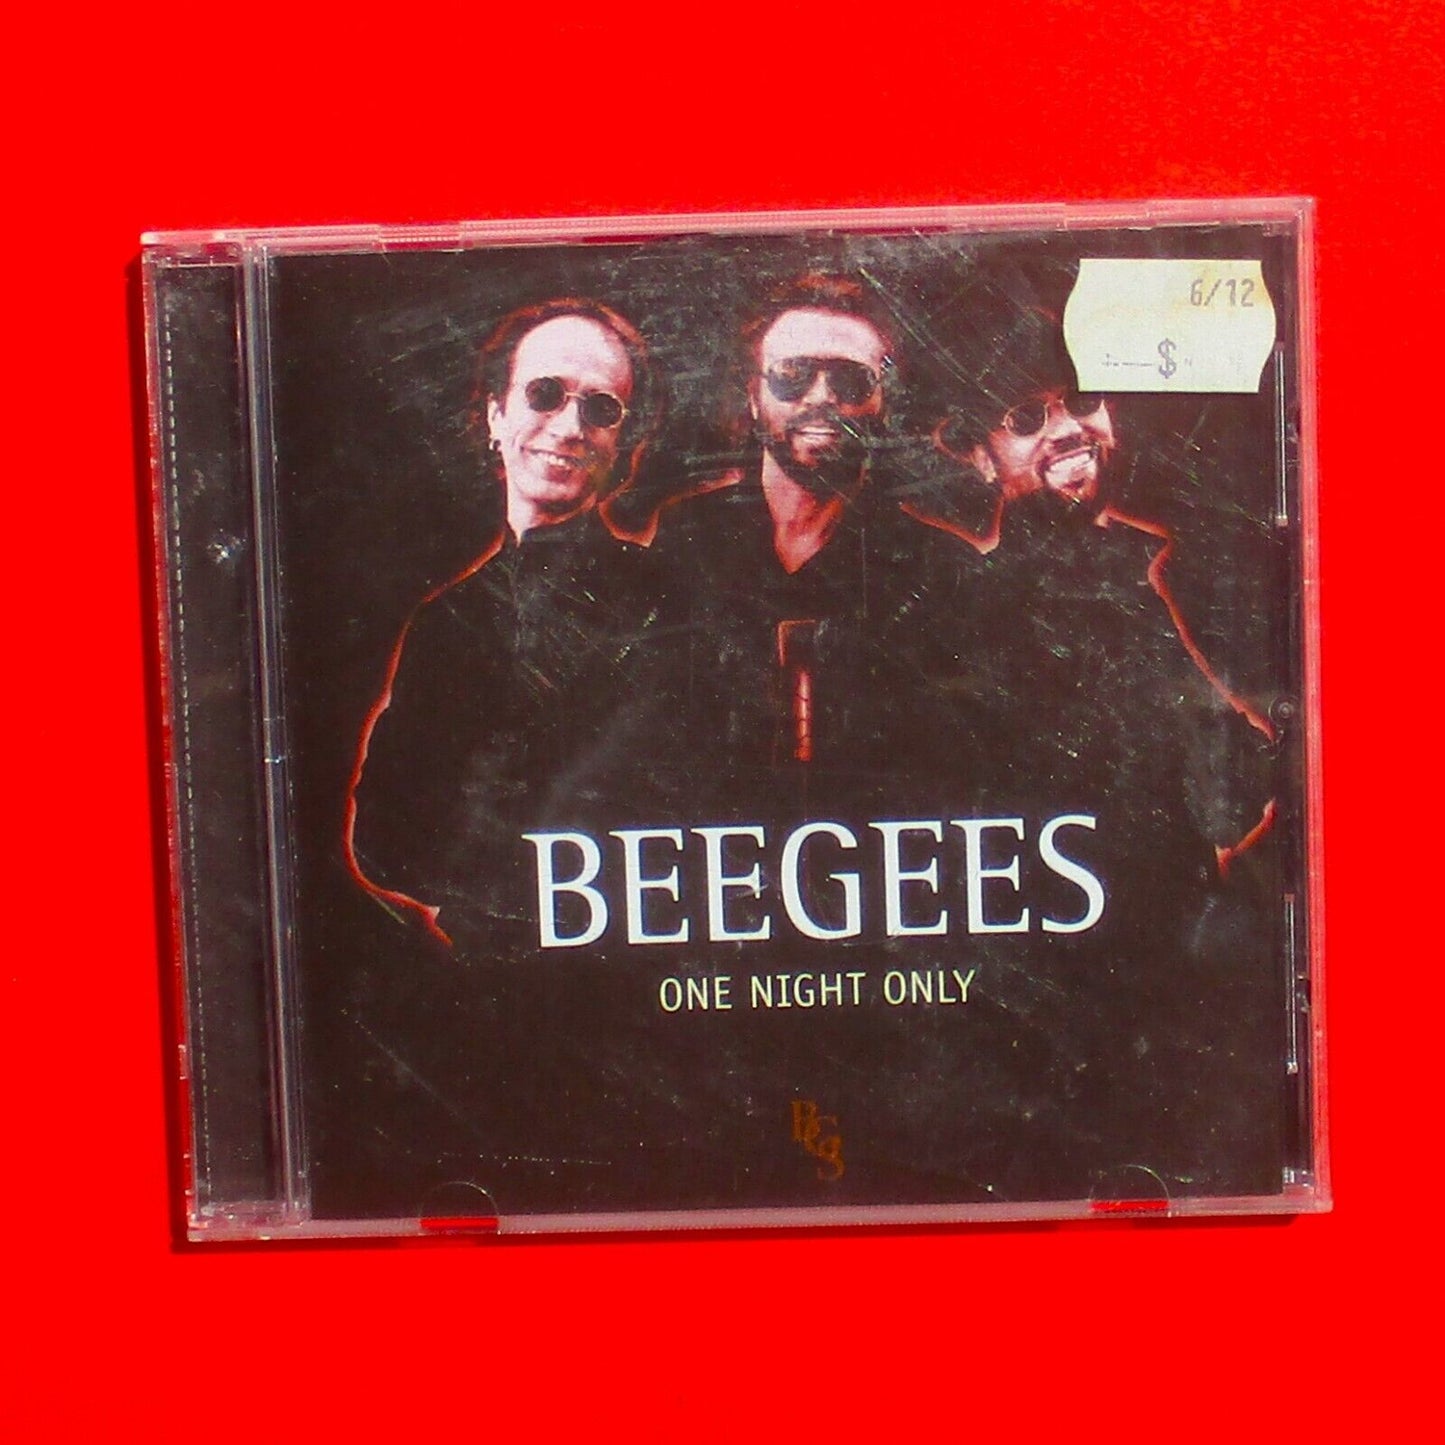 The Bee Gees ne Night Only 2003 Australian CD Album